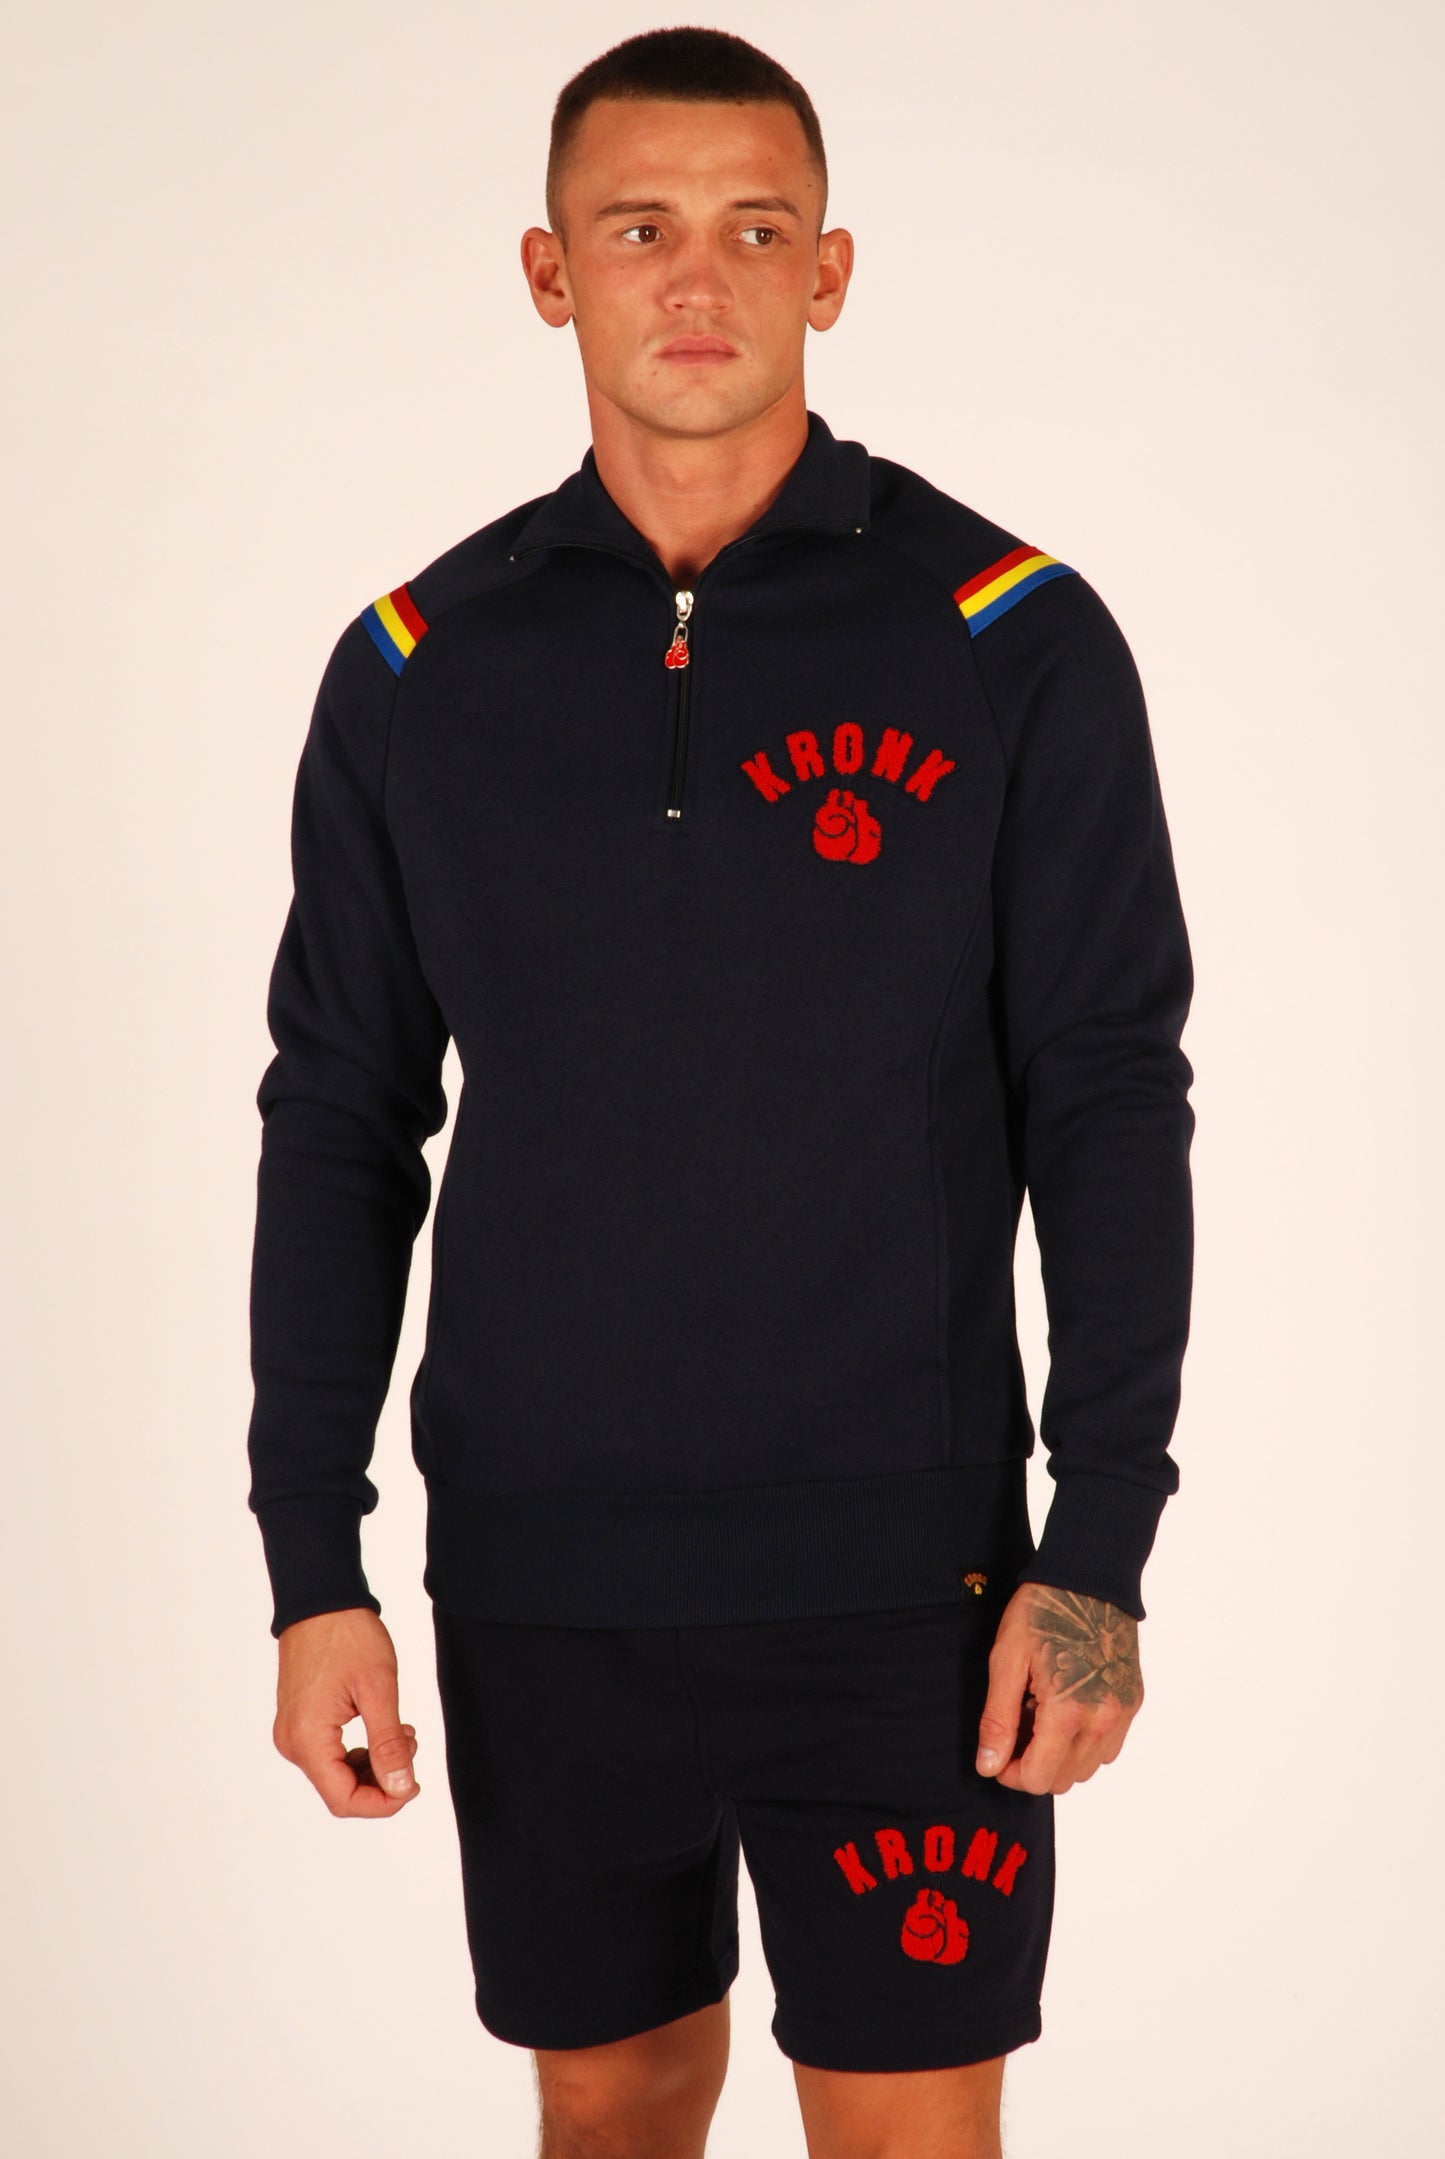 KRONK One Colour Gloves Quarter Zip Track Top Sweatshirt Navy